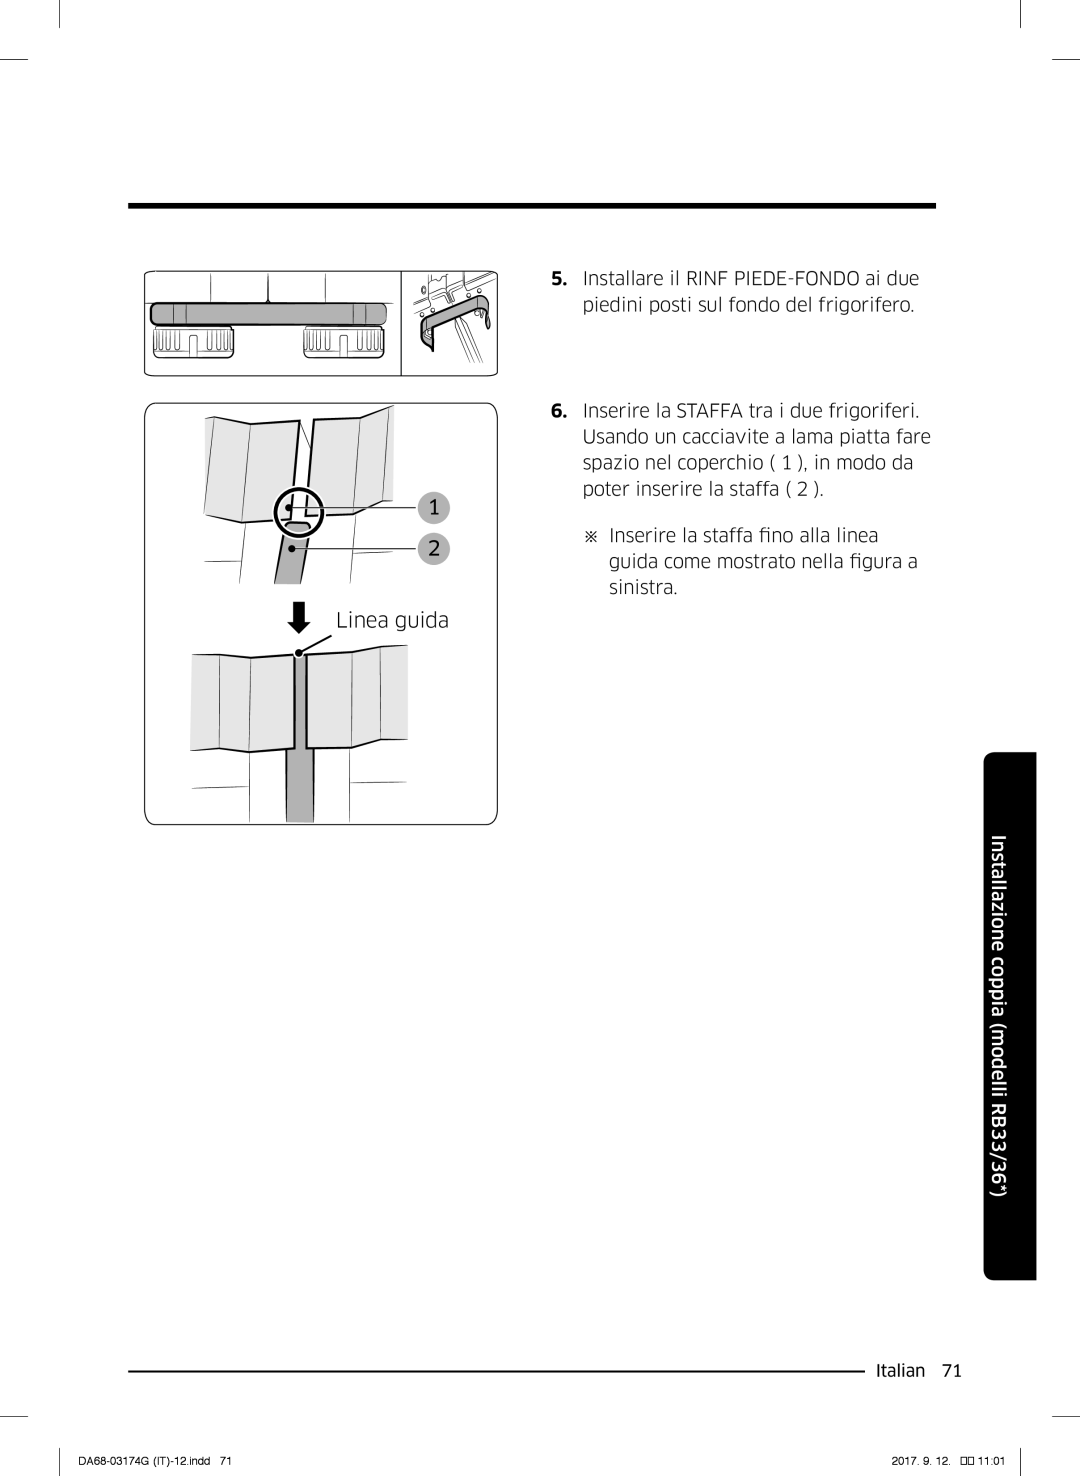 Samsung RB41J7839S4/EF, RL41J7799B1/EG manual Installare il RINF PIEDE-FONDO ai due piedini posti sul fondo del frigorifero 